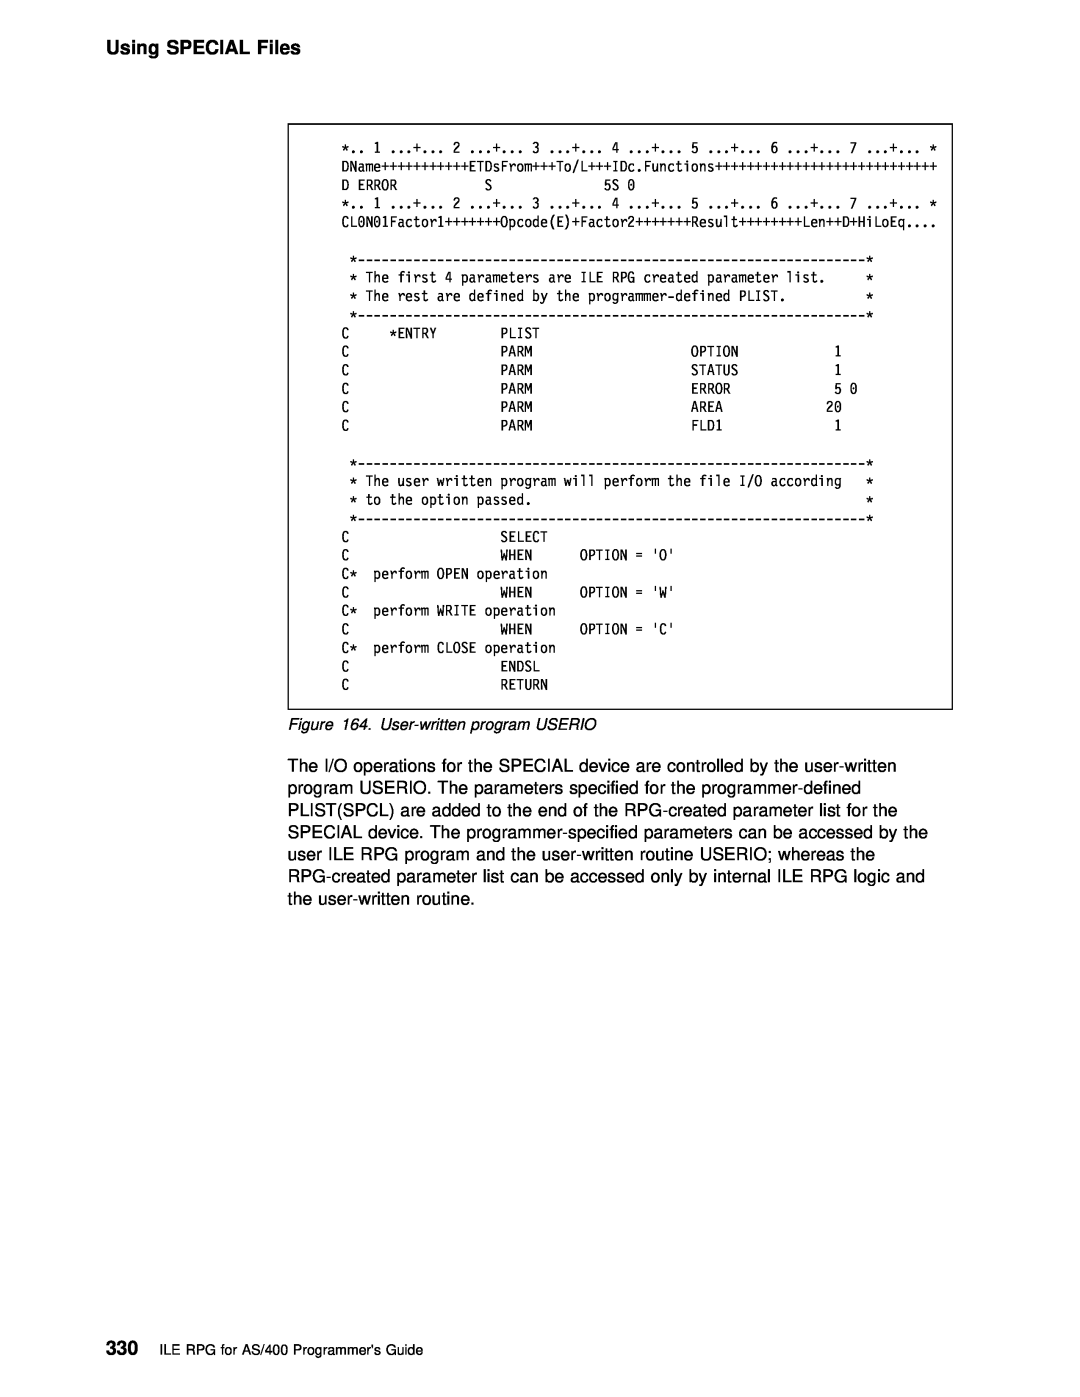 IBM AS/400 manual Using SPECIAL Files, User-written program USERIO, Plistspcl 